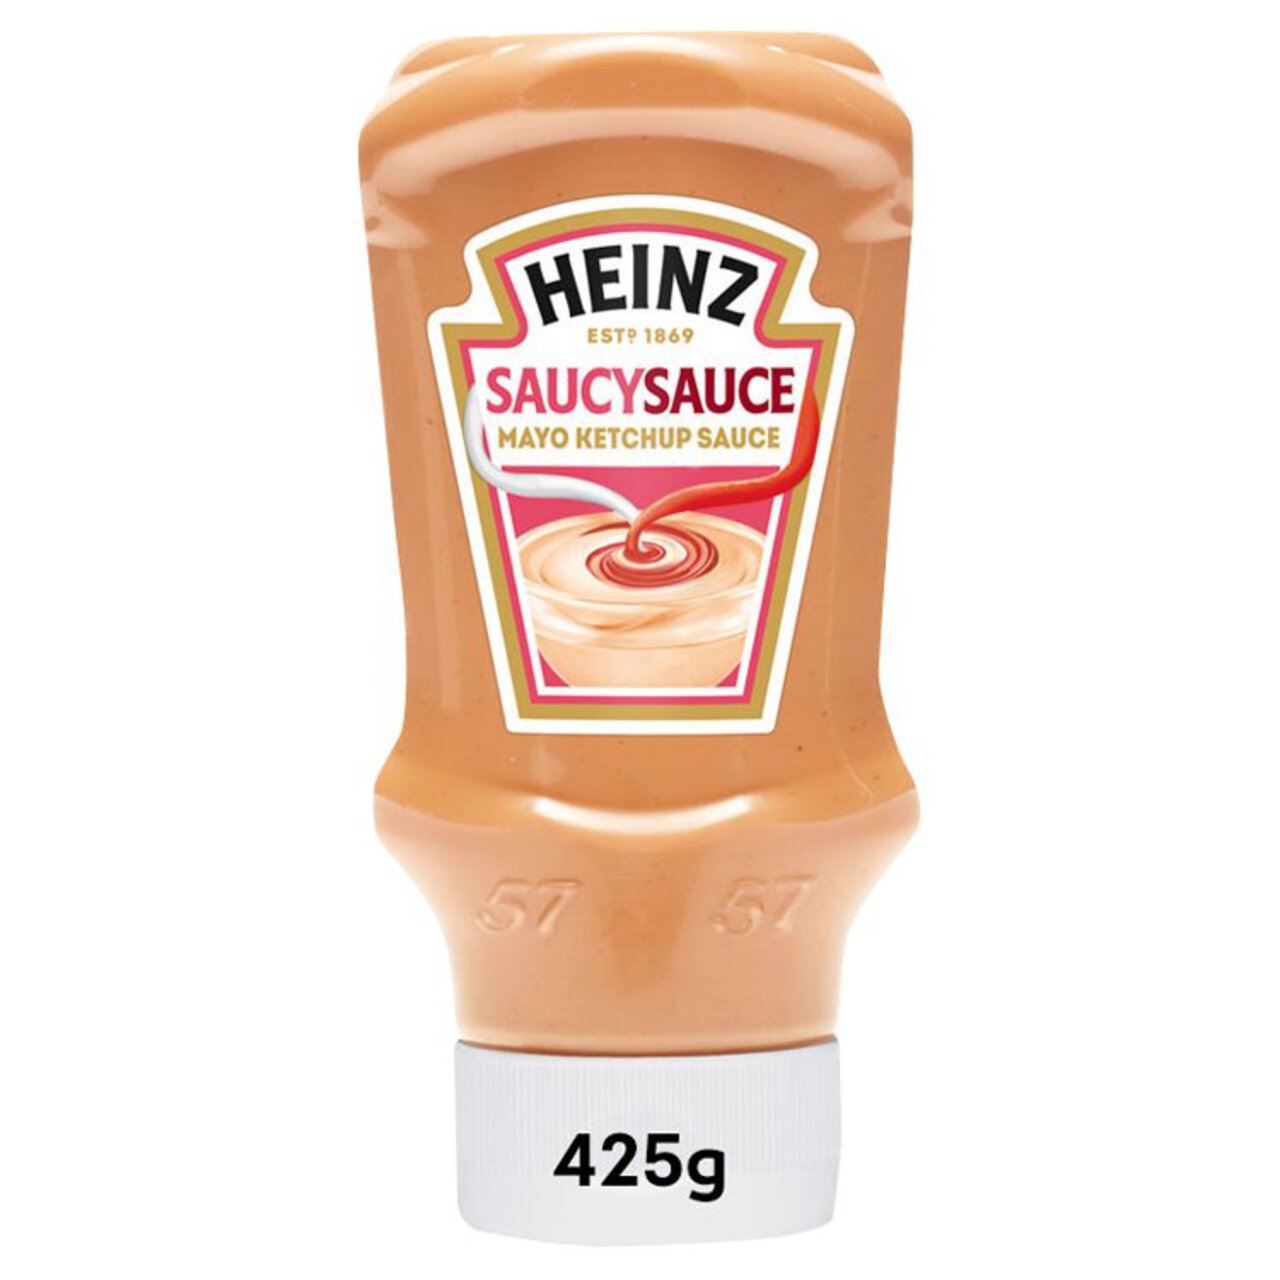 Heinz Saucy Sauce Mayonnaise Ketchup Sauce 425g